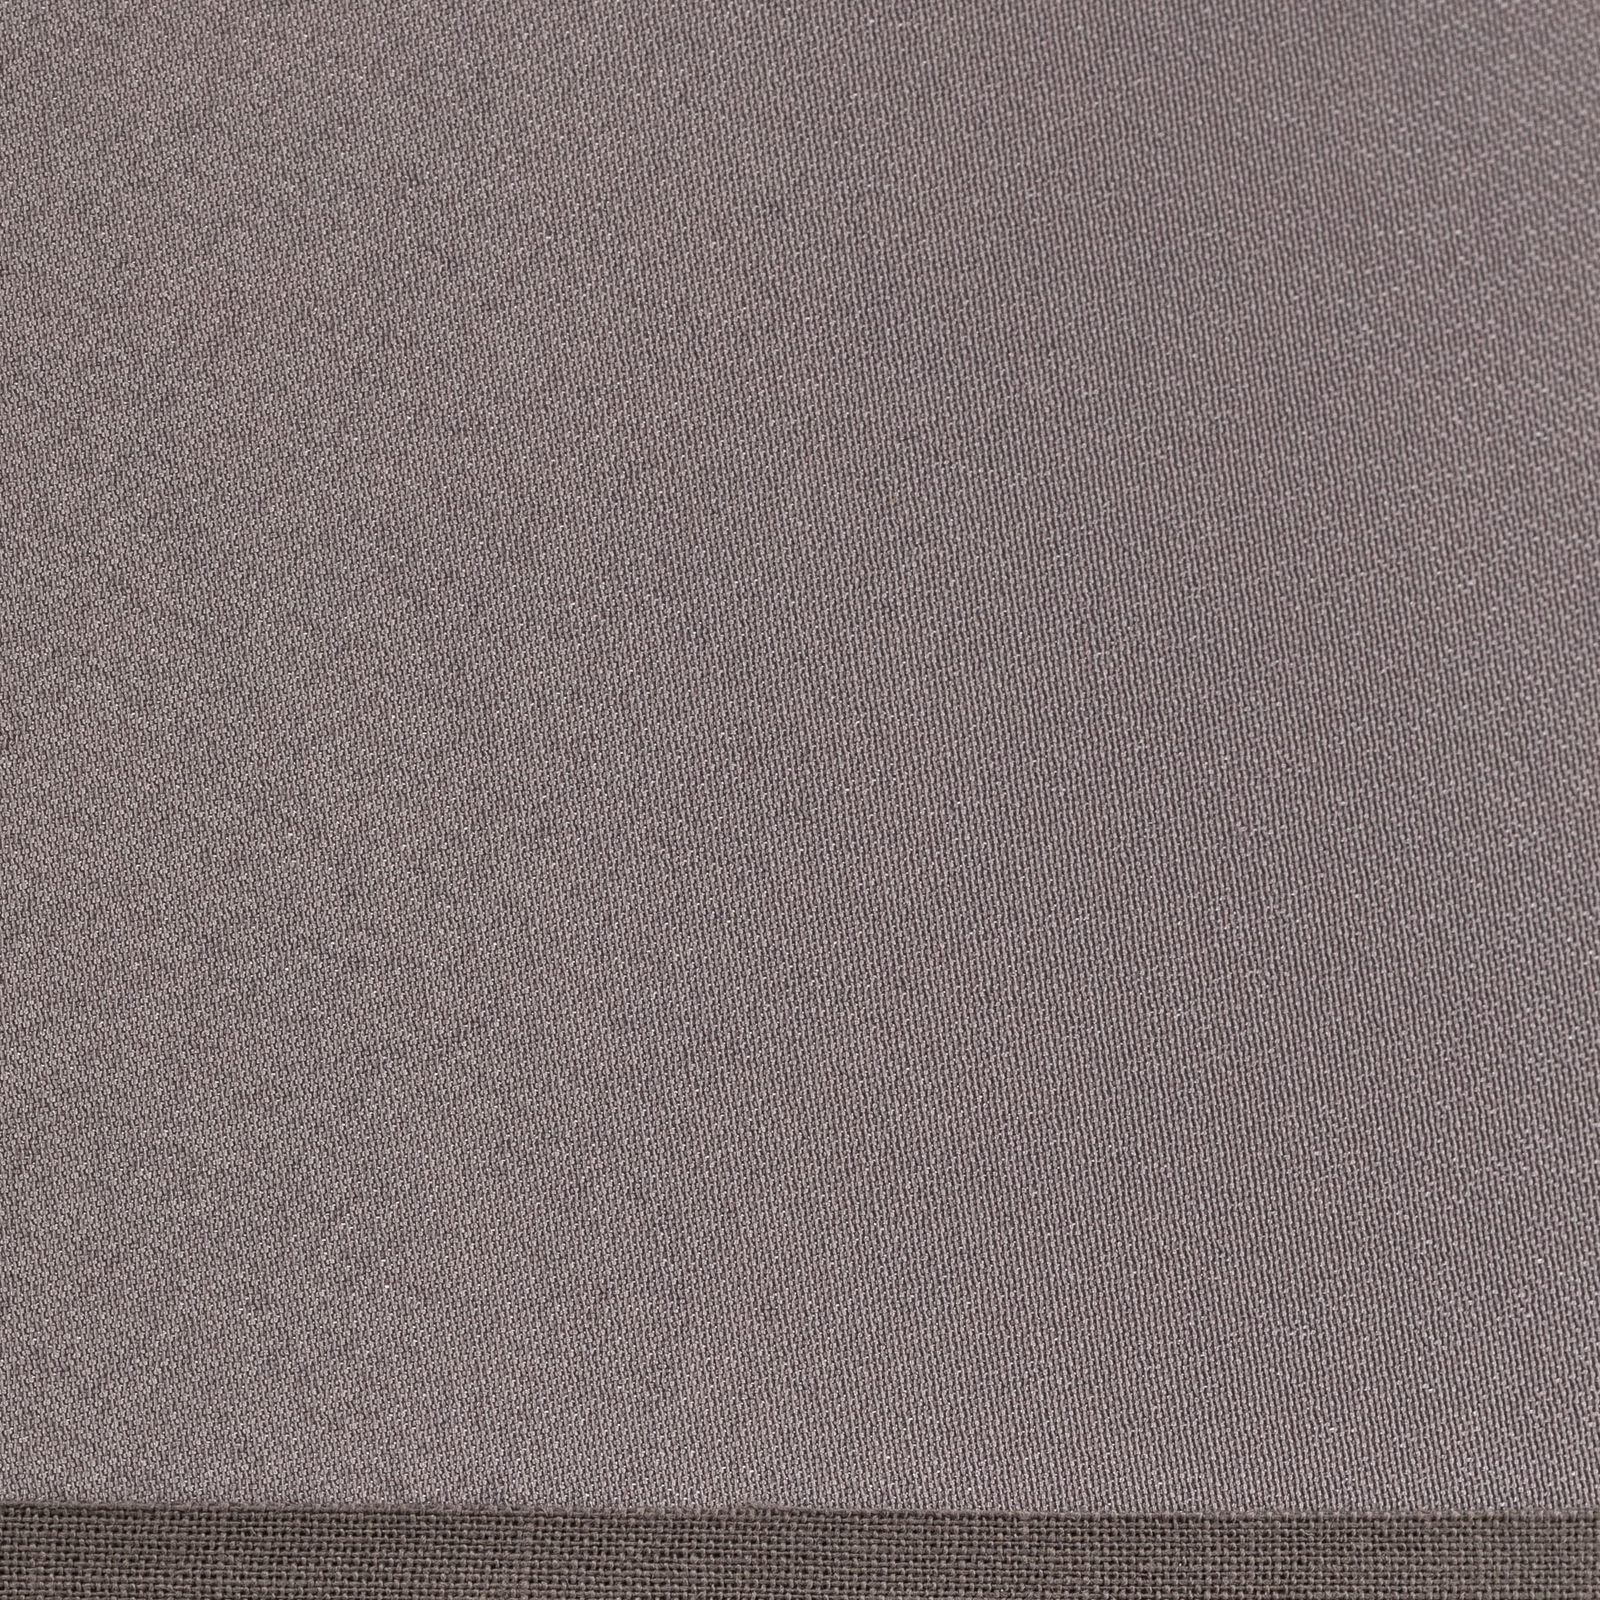 Cone lampeskærm, højde 25,5 cm, grå/hvid chintz